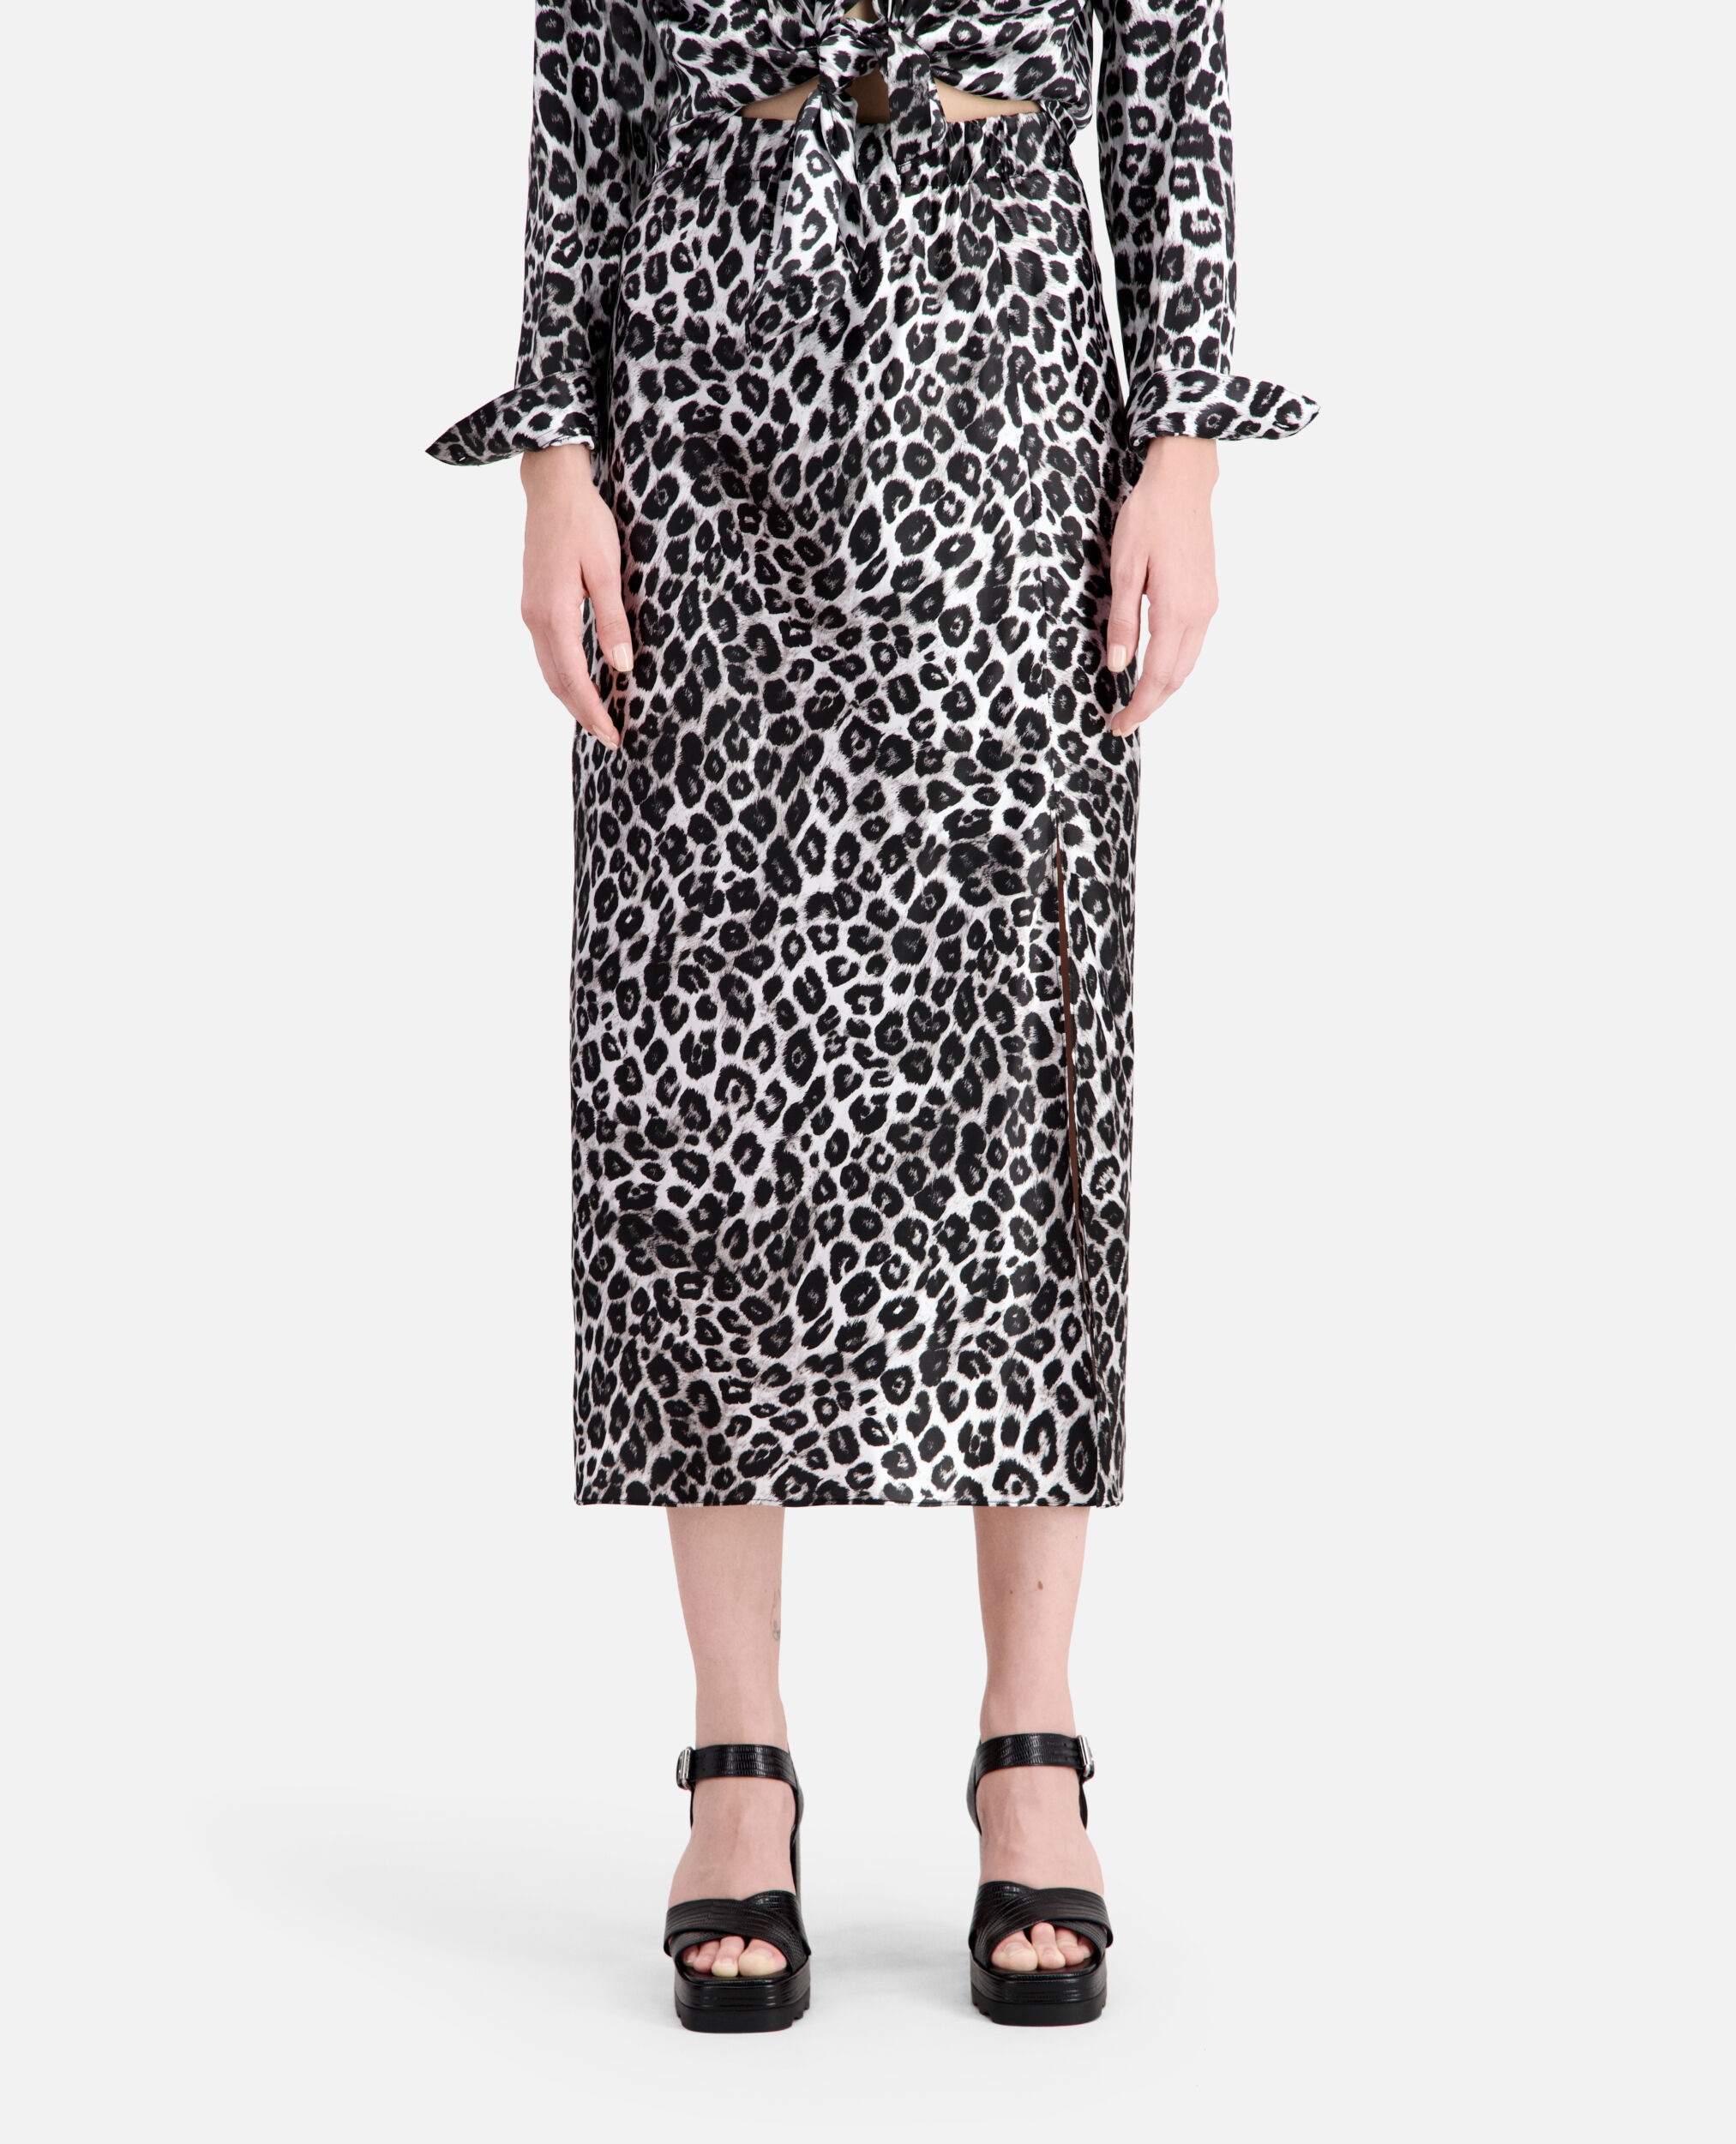 Long printed silk skirt, BLACK WHITE LEOPARD, hi-res image number null